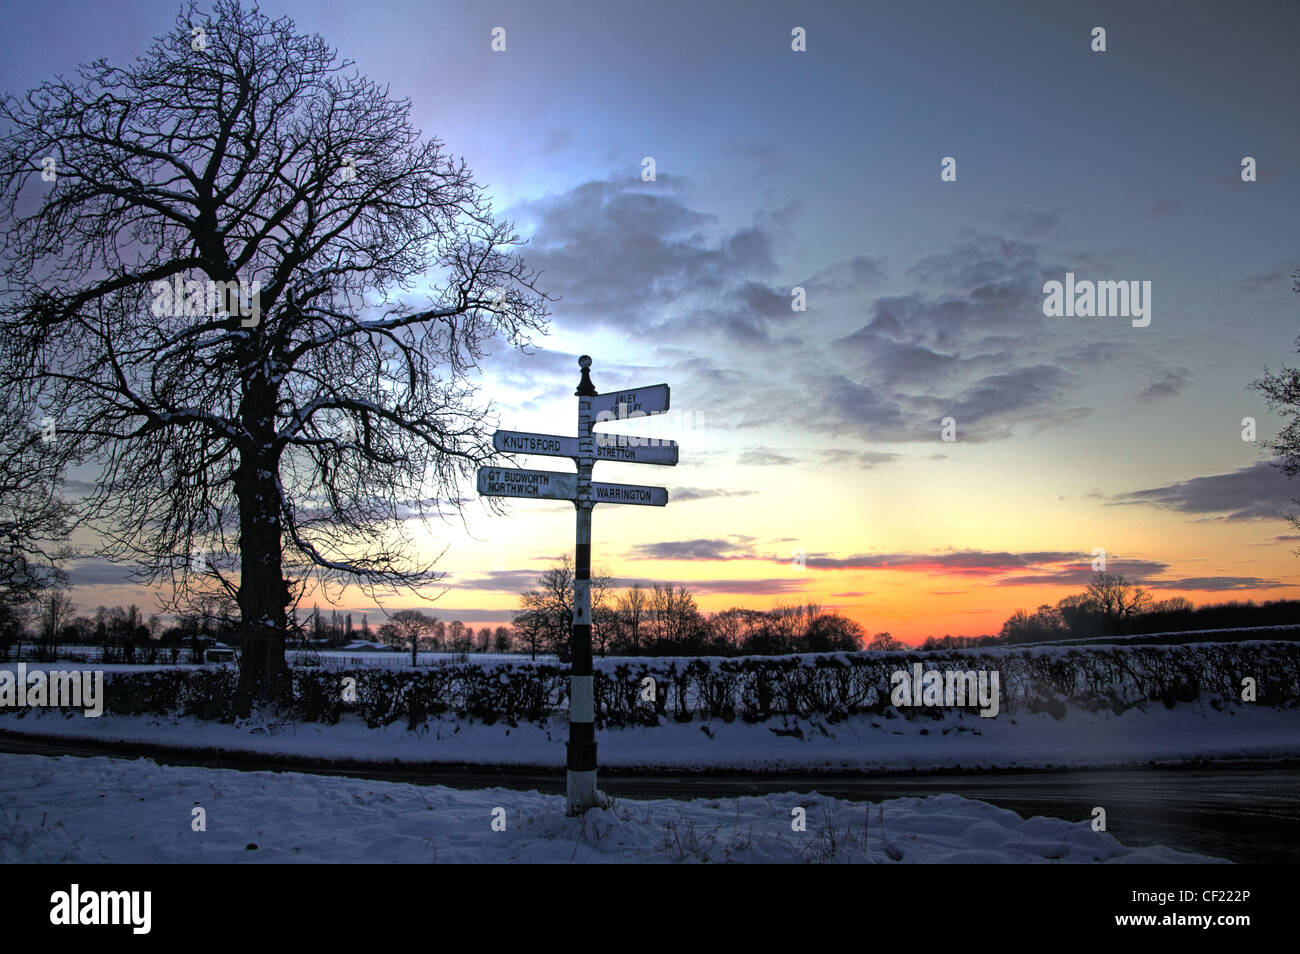 Budworth / Antrobus villages winter Sunset And Fingerpost, Northwich, Cheshire, England, UK Stock Photo